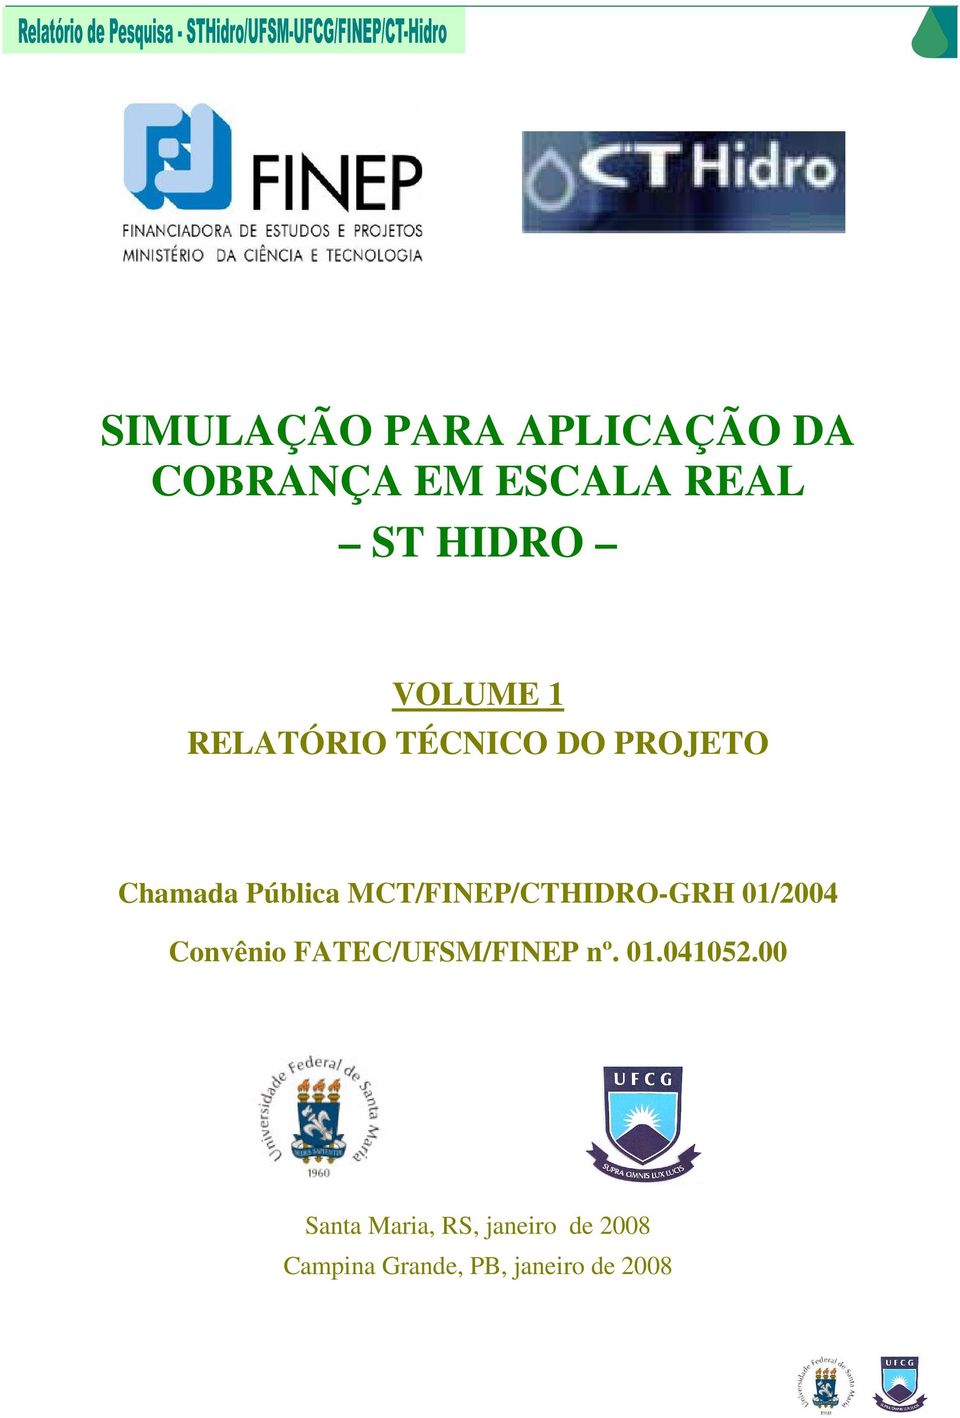 MCT/FINEP/CTHIDRO-GRH 01/2004 Convênio FATEC/UFSM/FINEP nº. 01.041052.